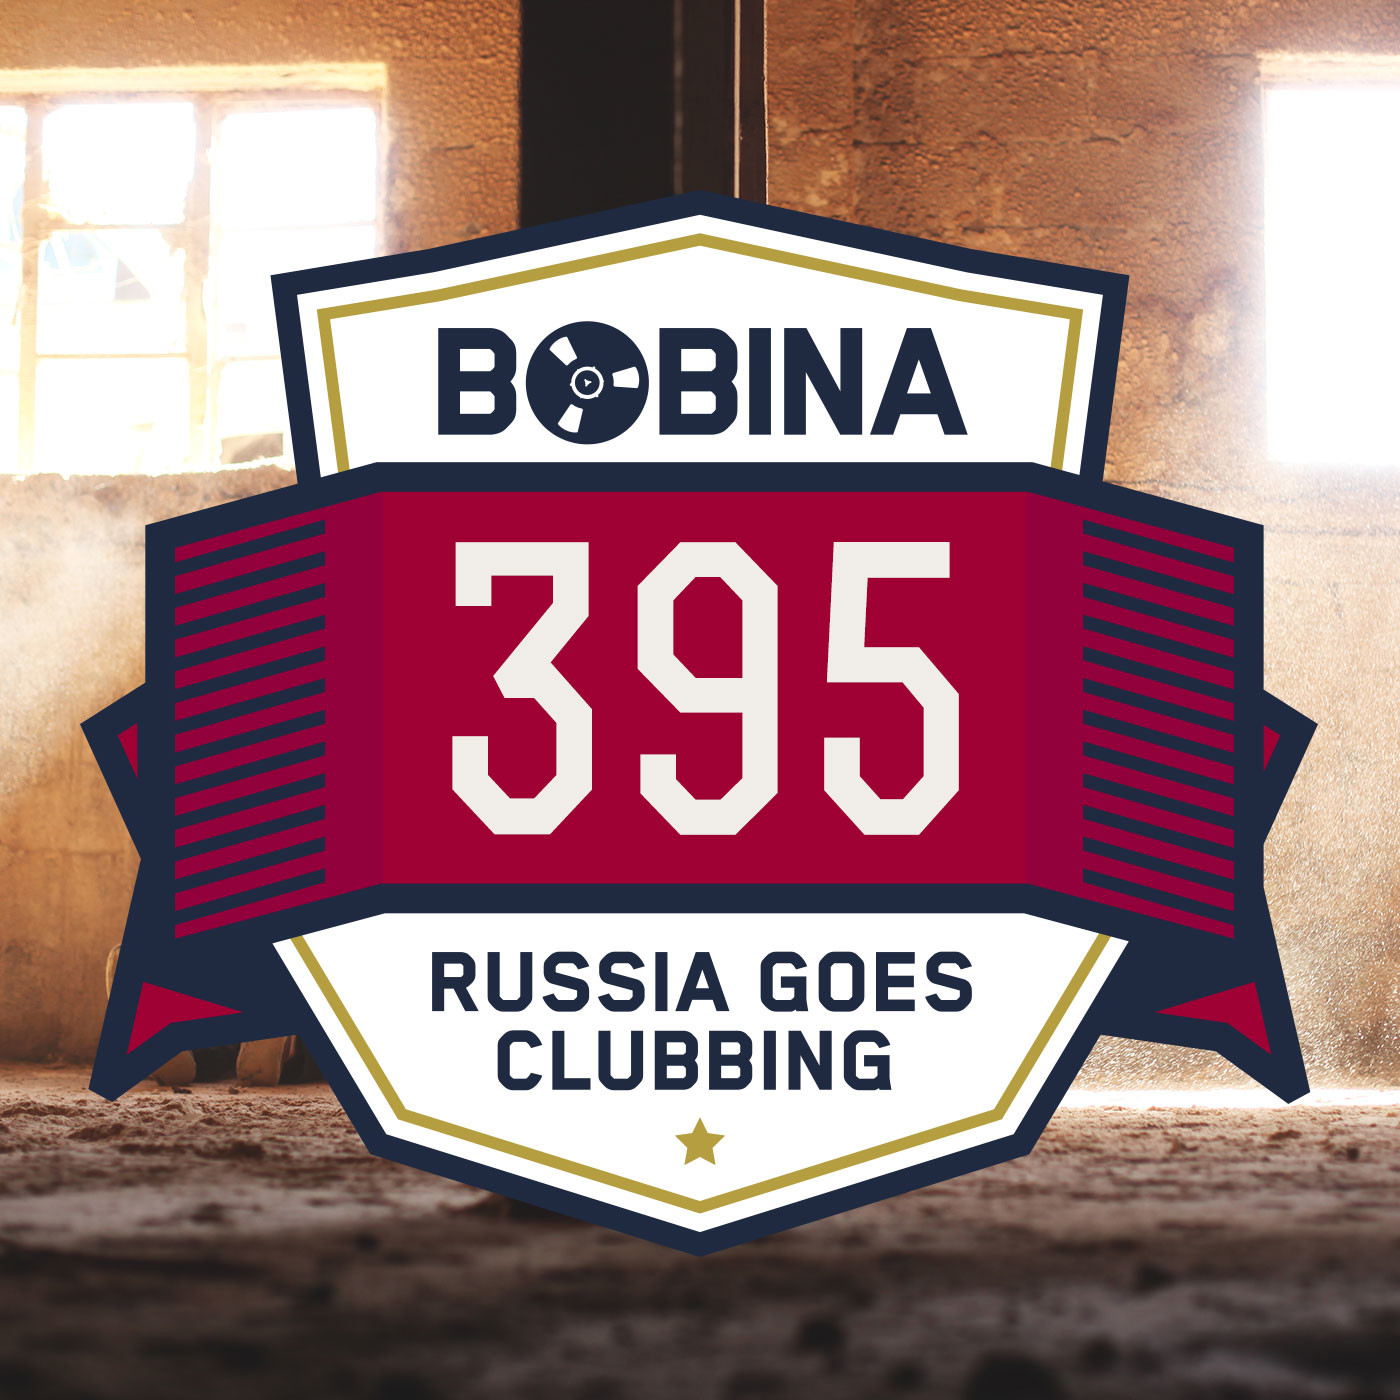 Nr. 395 Russia Goes Clubbing (Rus)